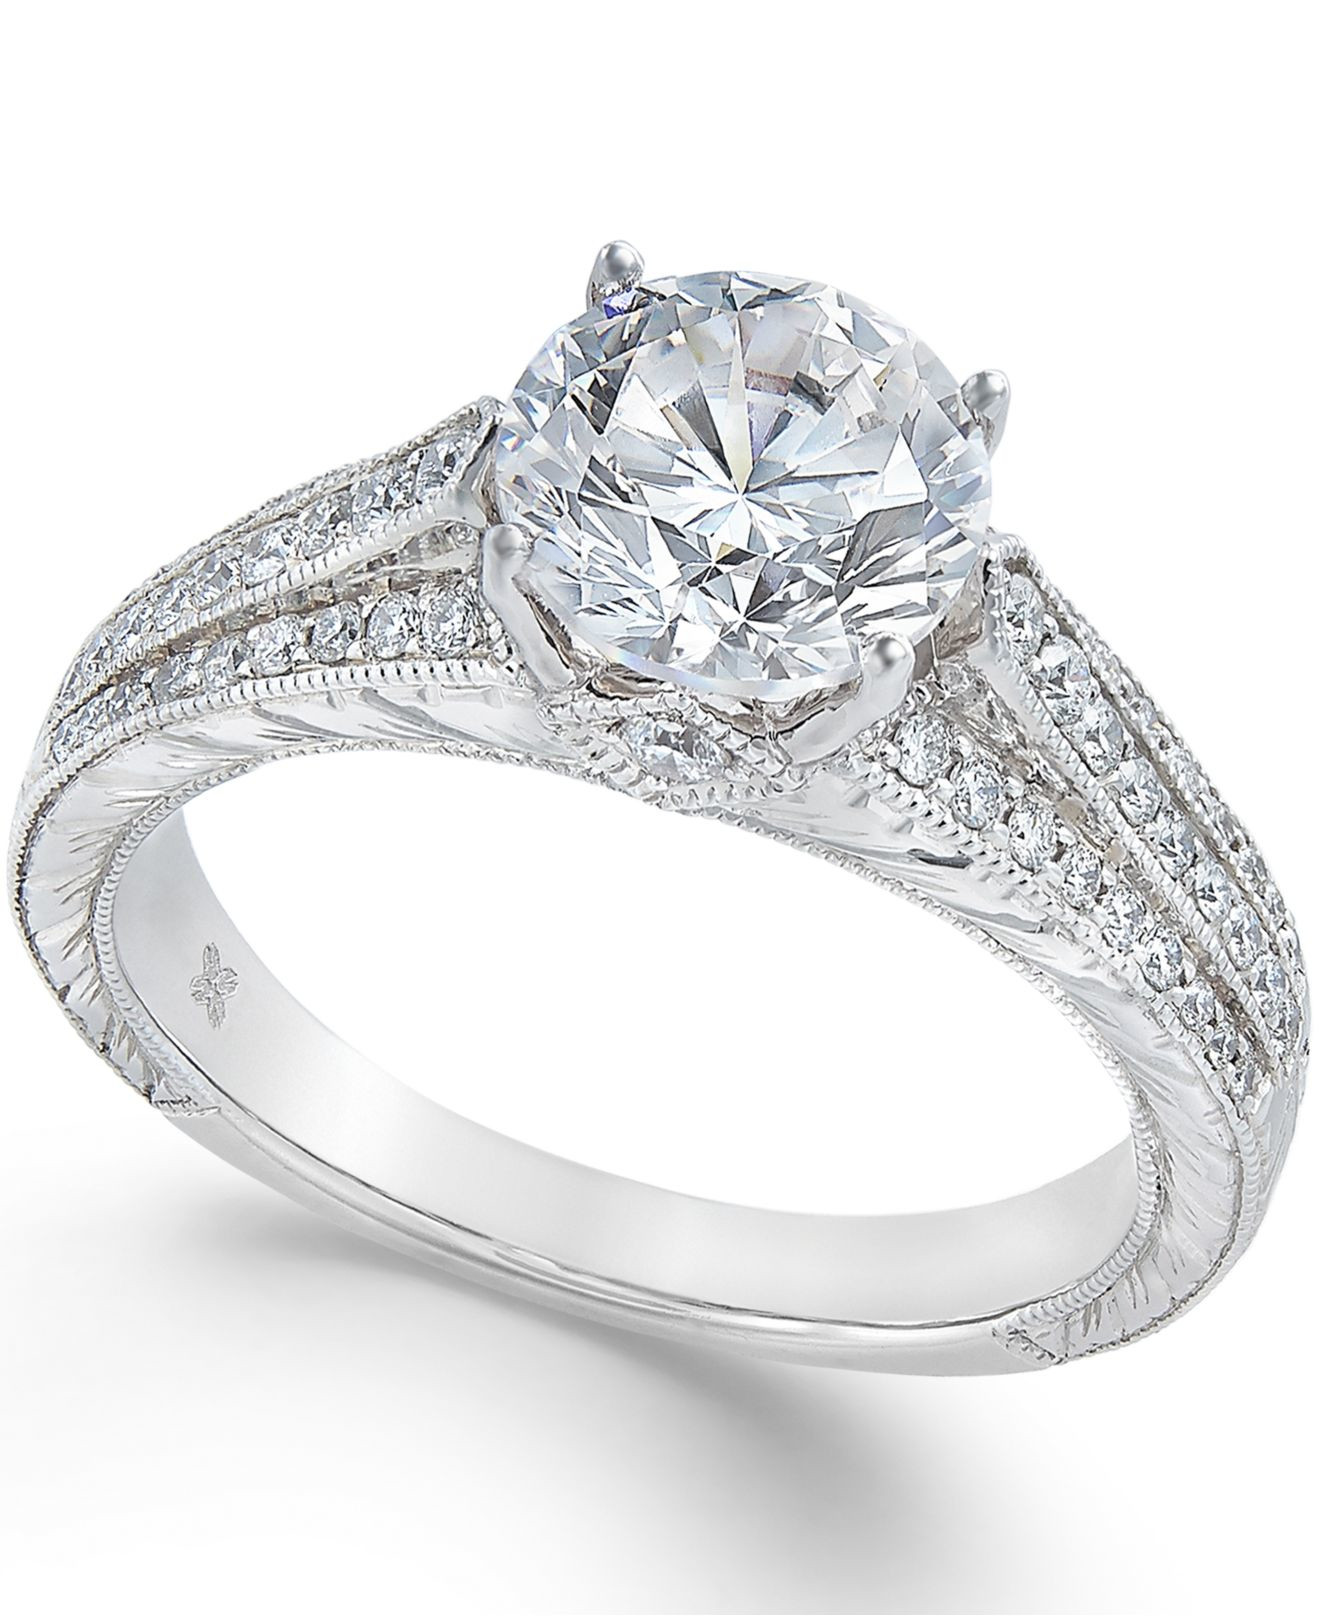 Macys Diamond Rings
 Macy s Certified Diamond Engagement Ring 1 1 5 Ct T w